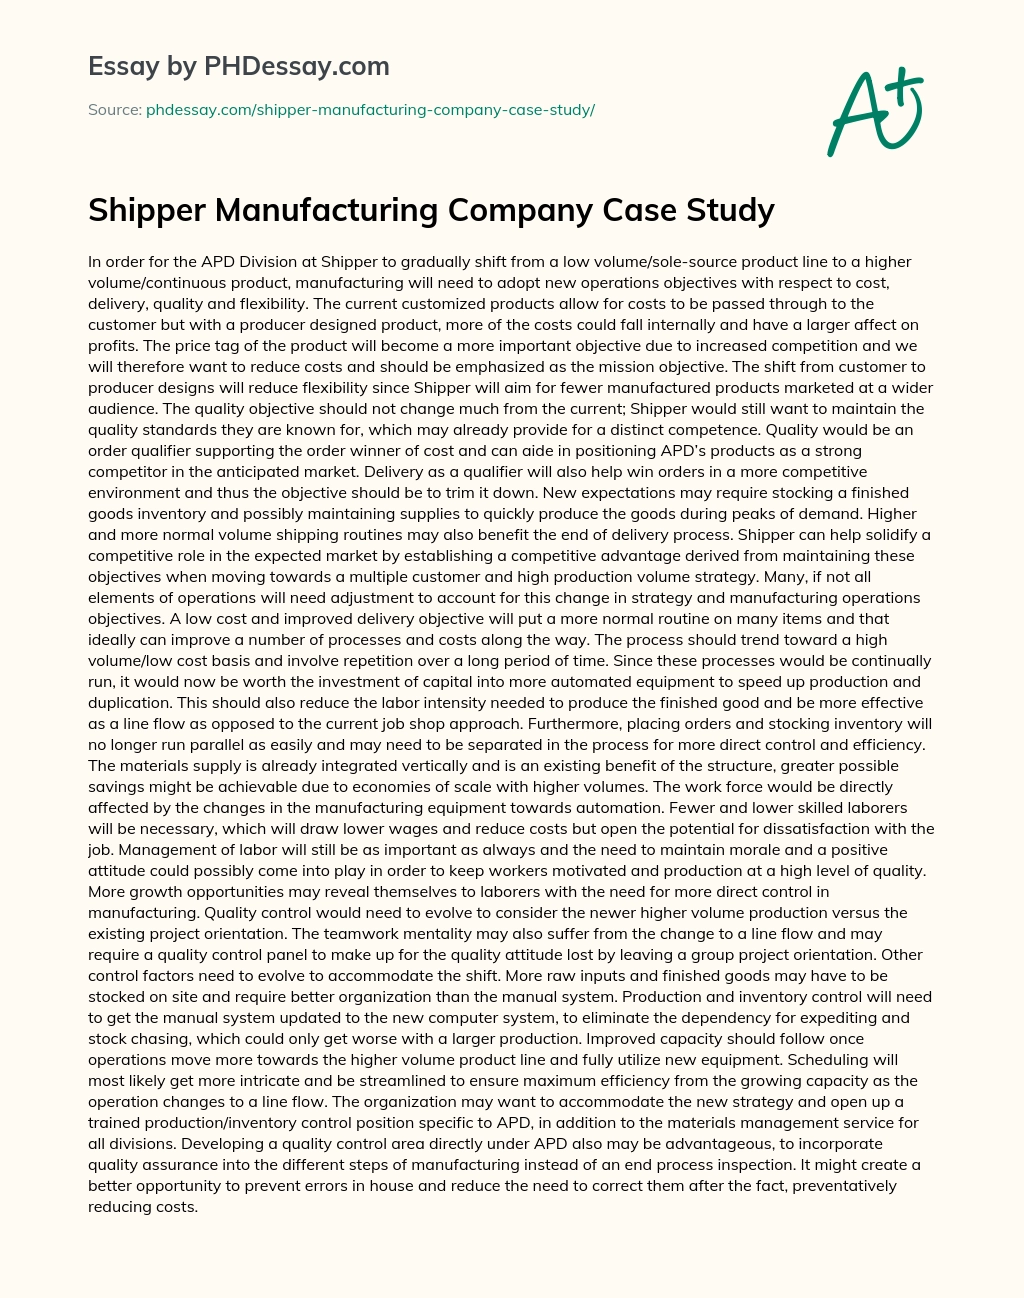 Shipper Manufacturing Company Case Study essay